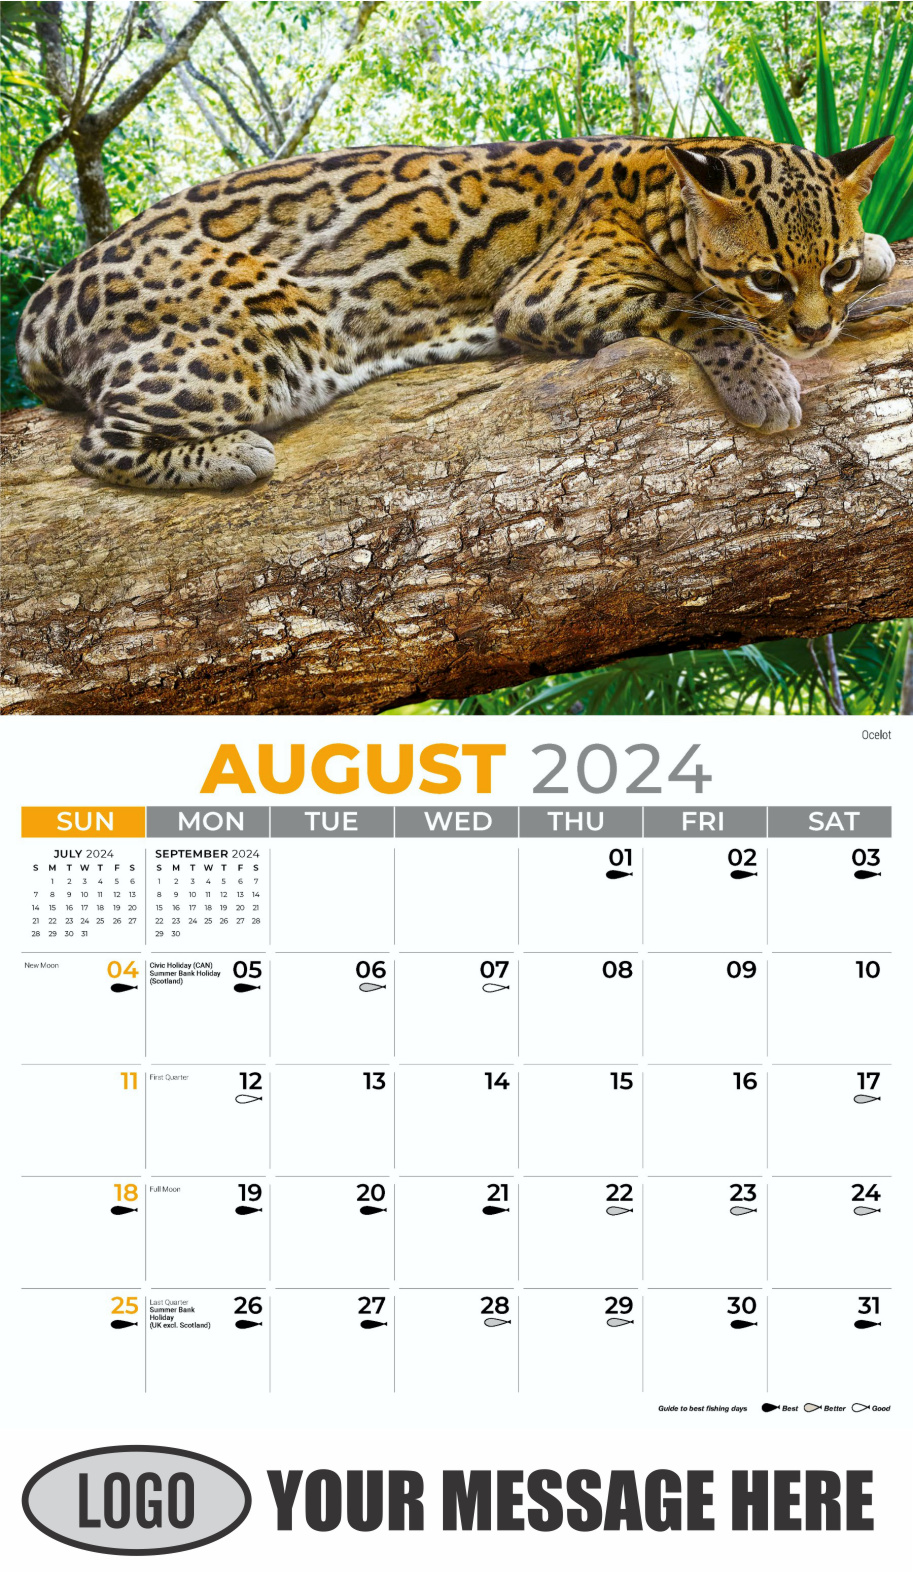 North American Wildlife 2024 Business Promo Wall Calendar - August